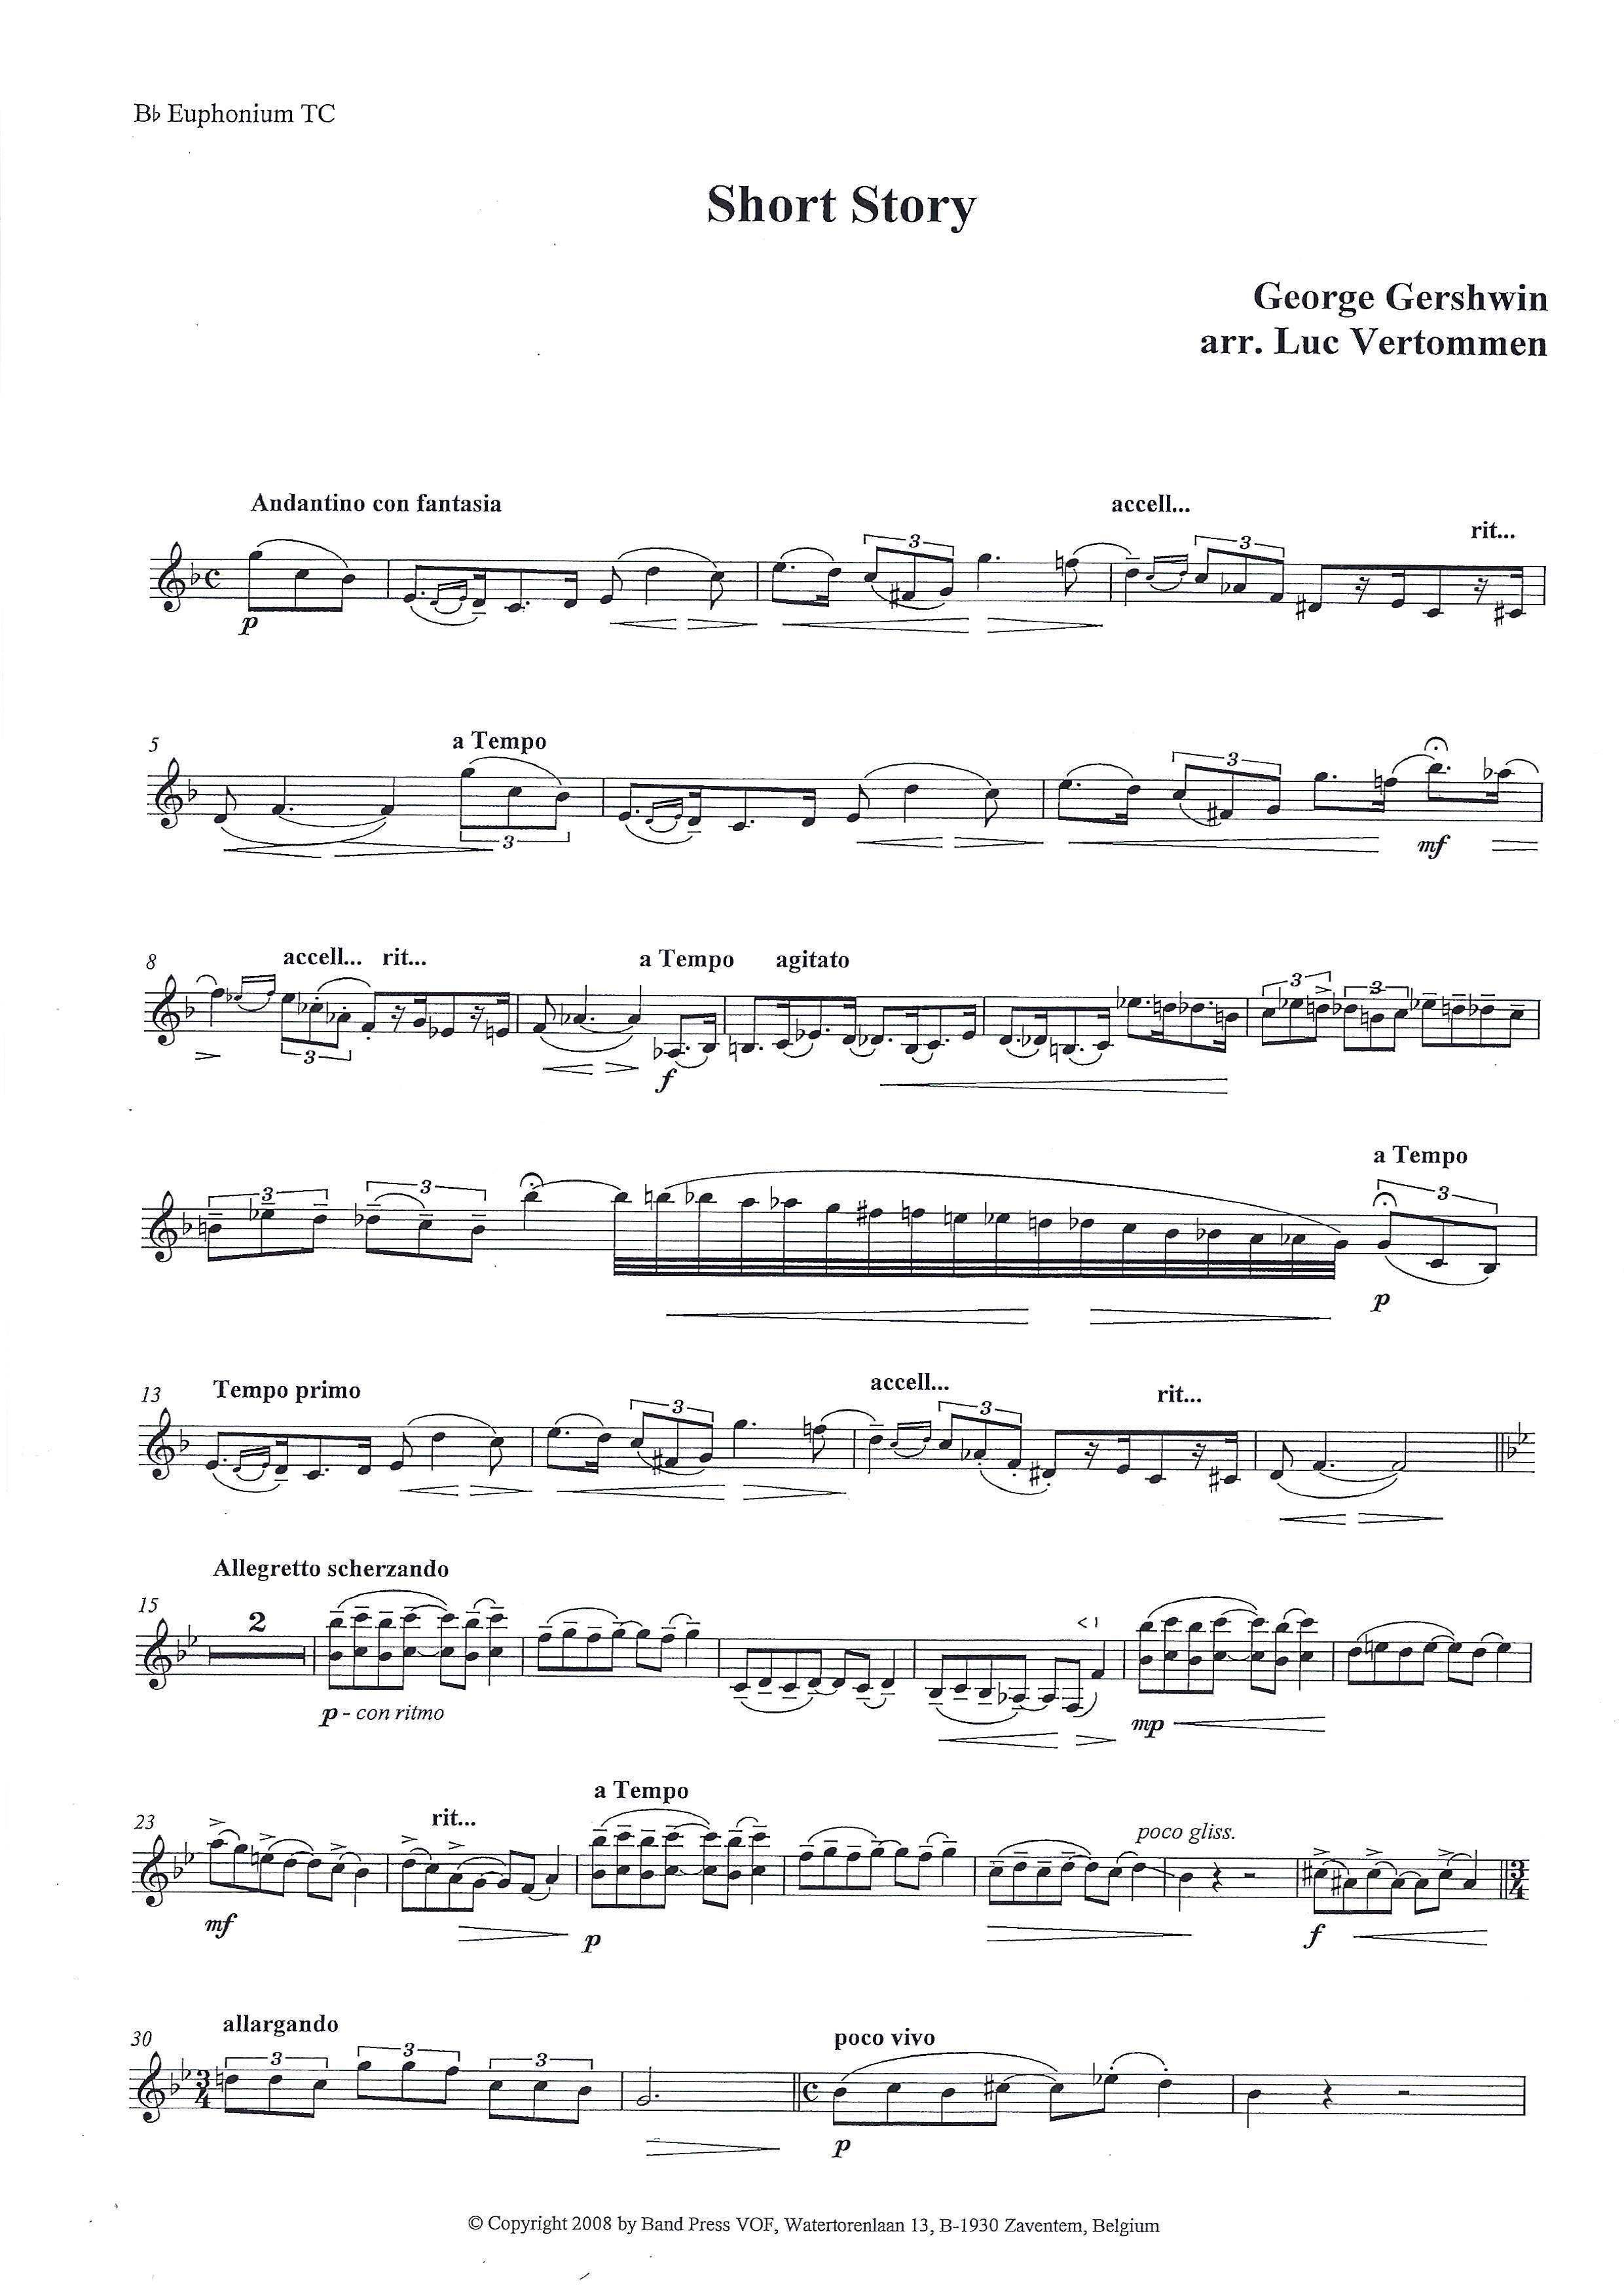 KREISLER SHEET MUSIC DIGITAL via CD 99 Pieces Violin Piano Cello